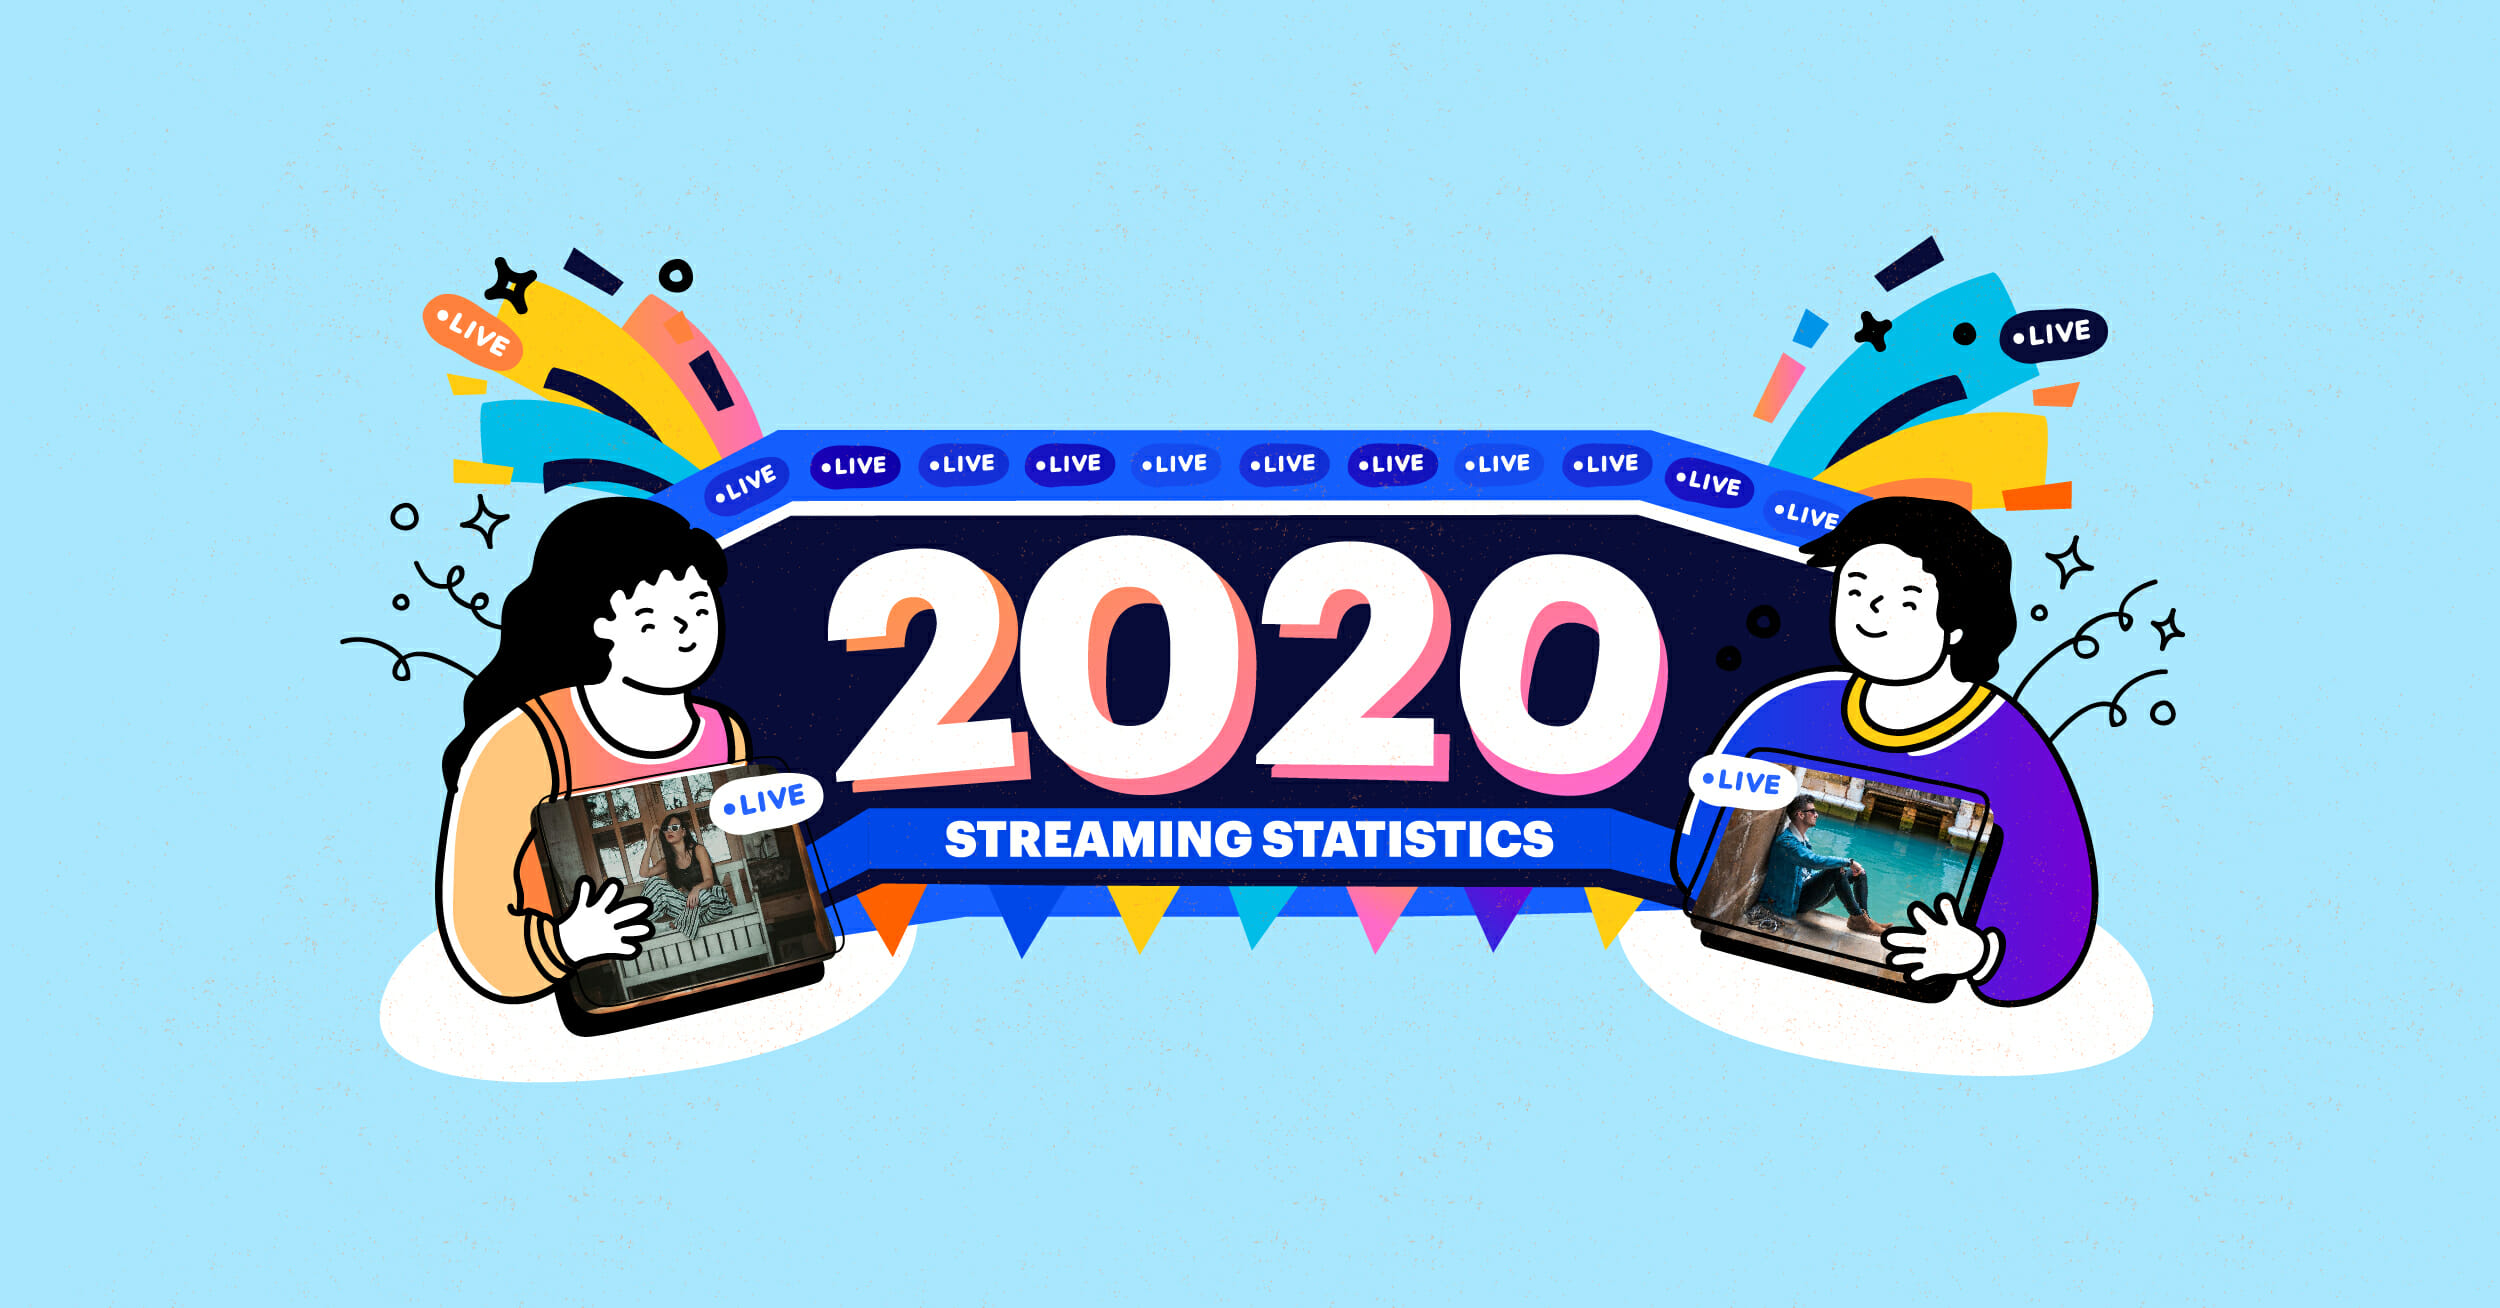 2020 video streaming statistics